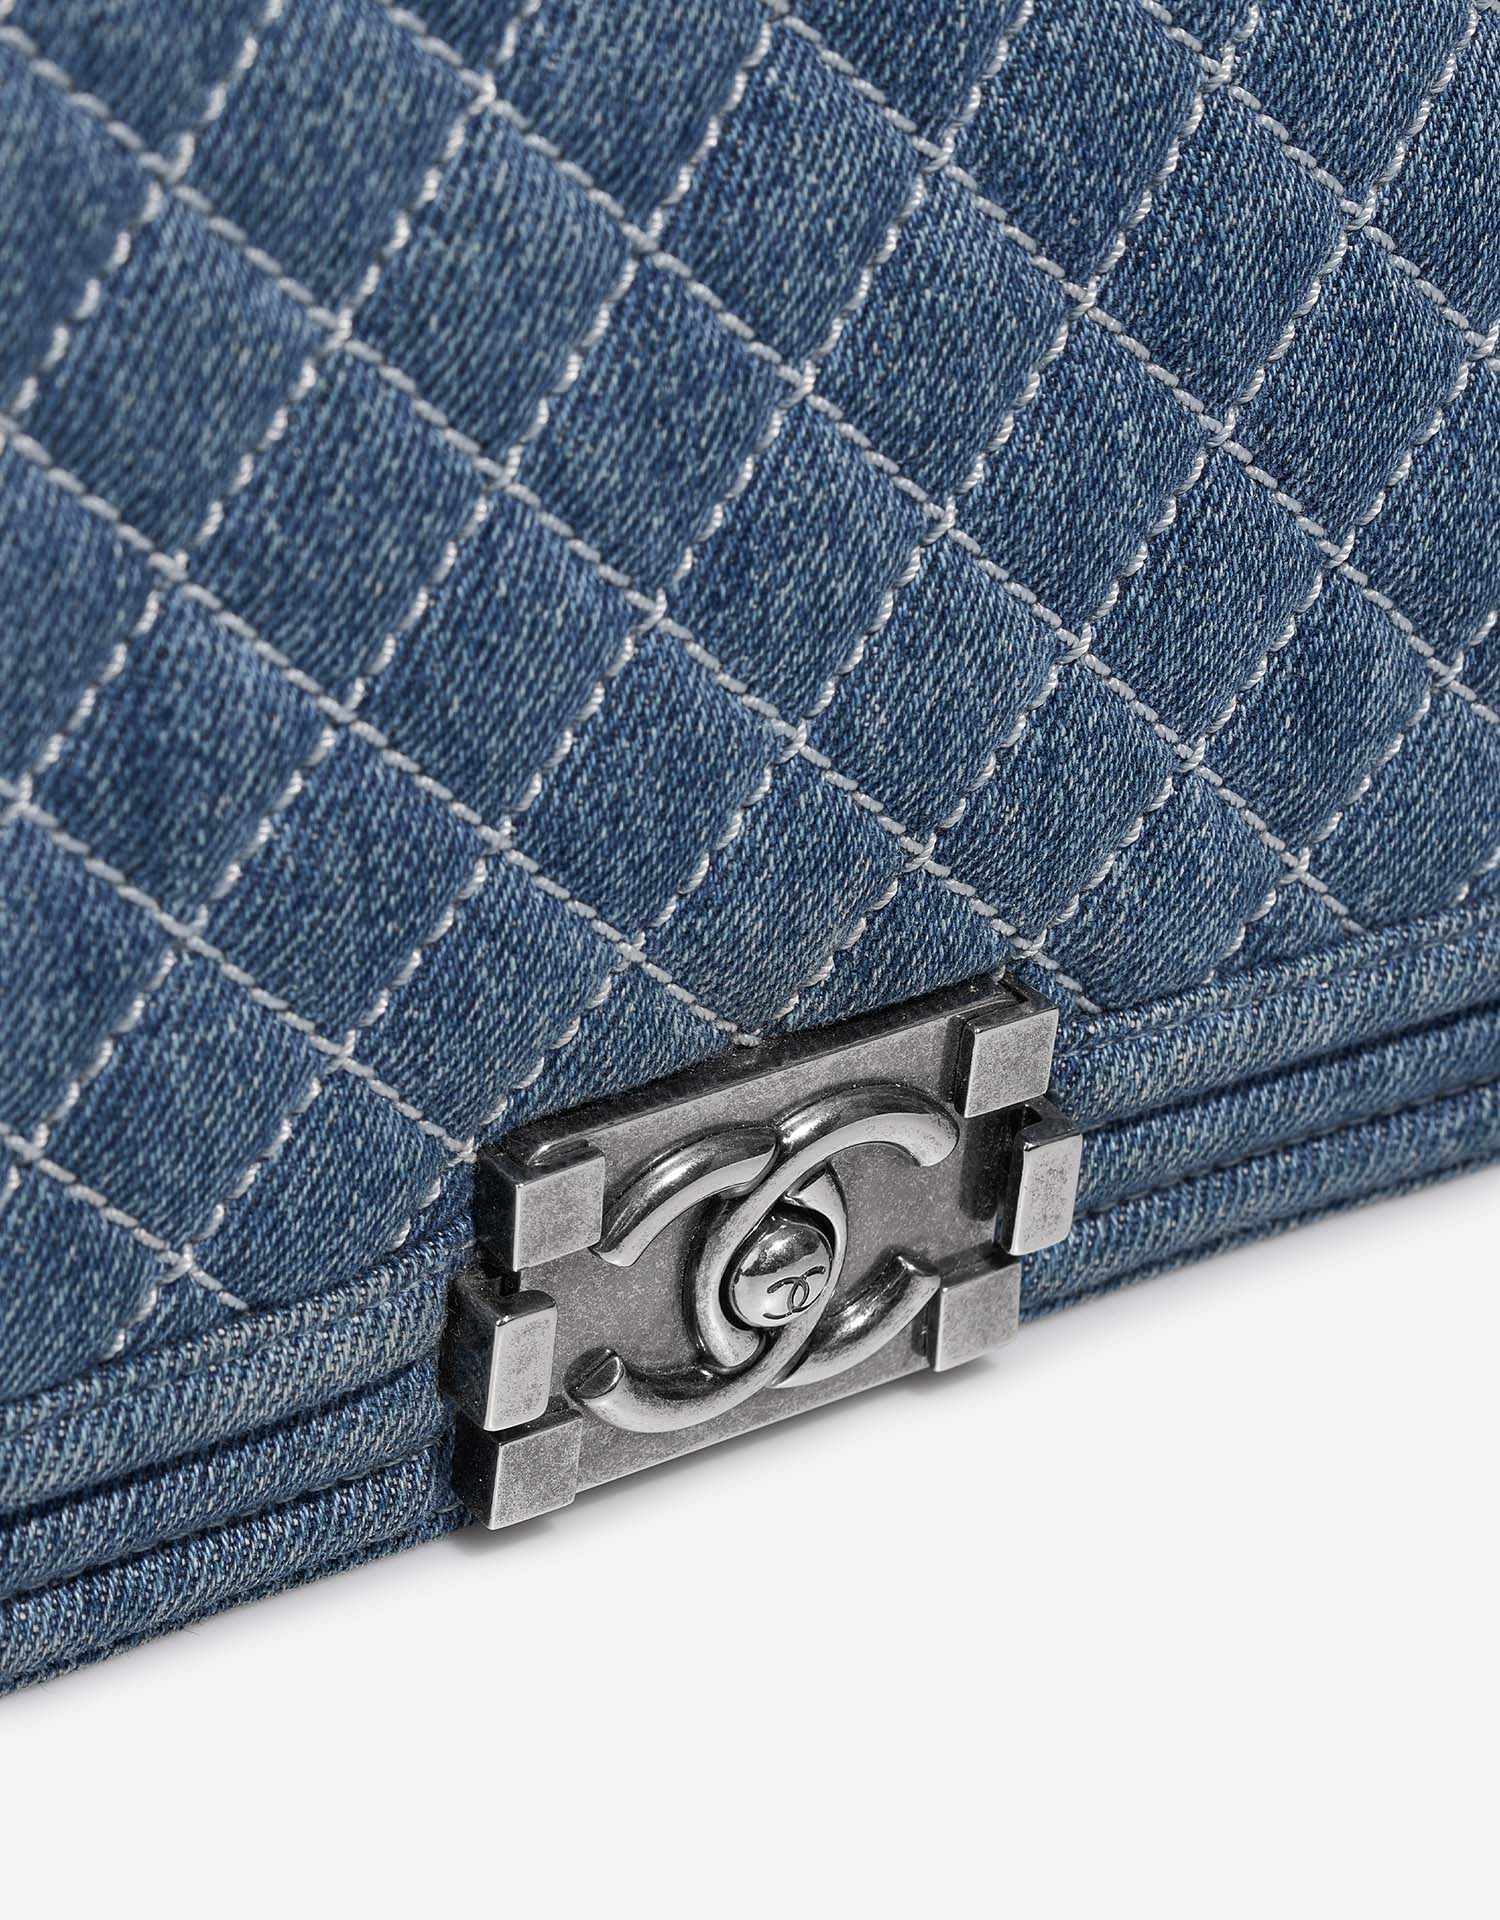 Chanel Boy Large Blue Closing System  | Sell your designer bag on Saclab.com